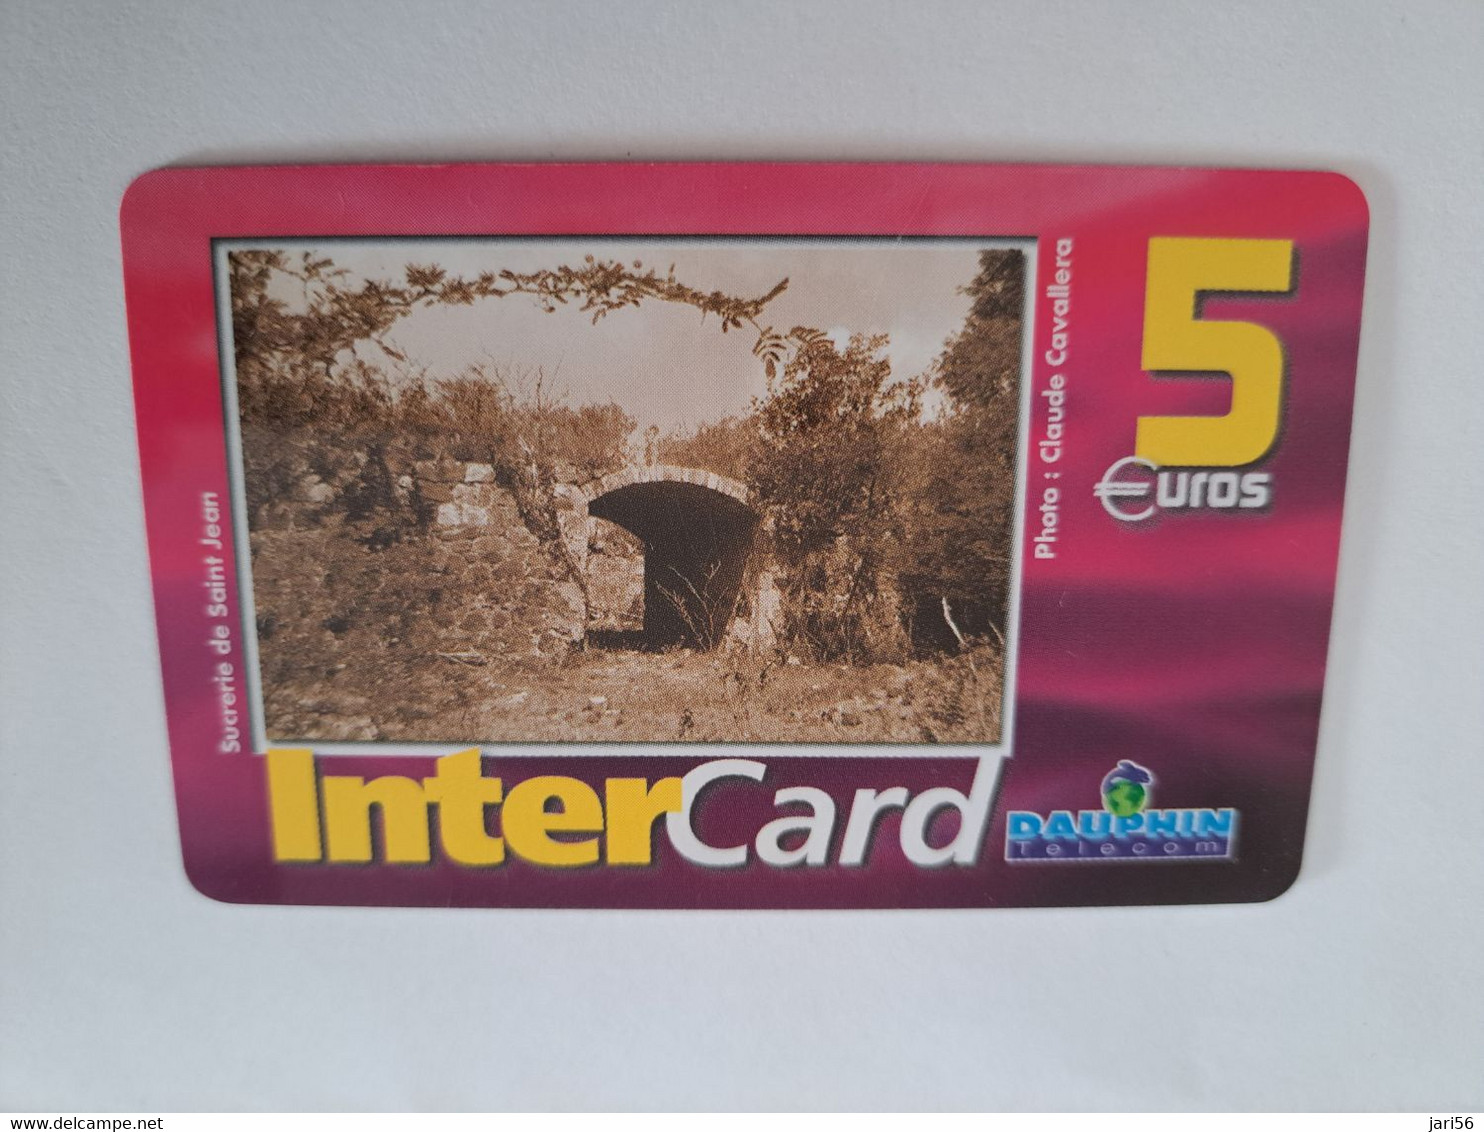 Antilles (French) - ST MARTIN INTERCARD / SUCRERIE DE SAINT JEAN 3 EURO /  INTER 99 / USED CARD ** 10193 **